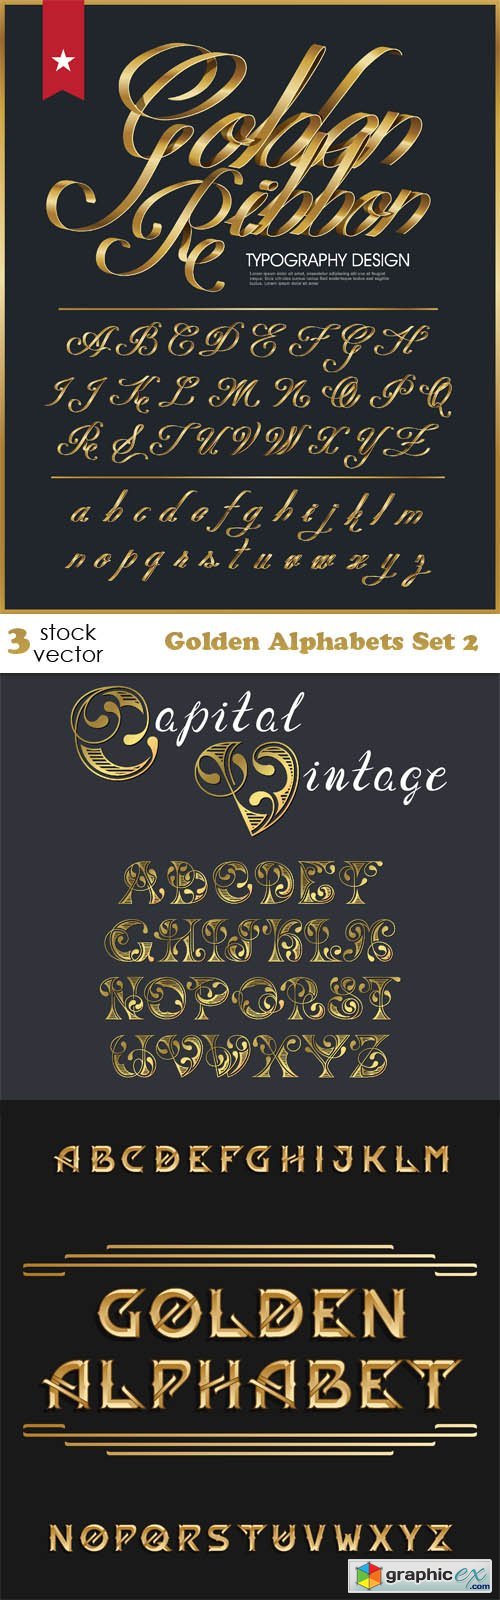 Golden Alphabets Set 2